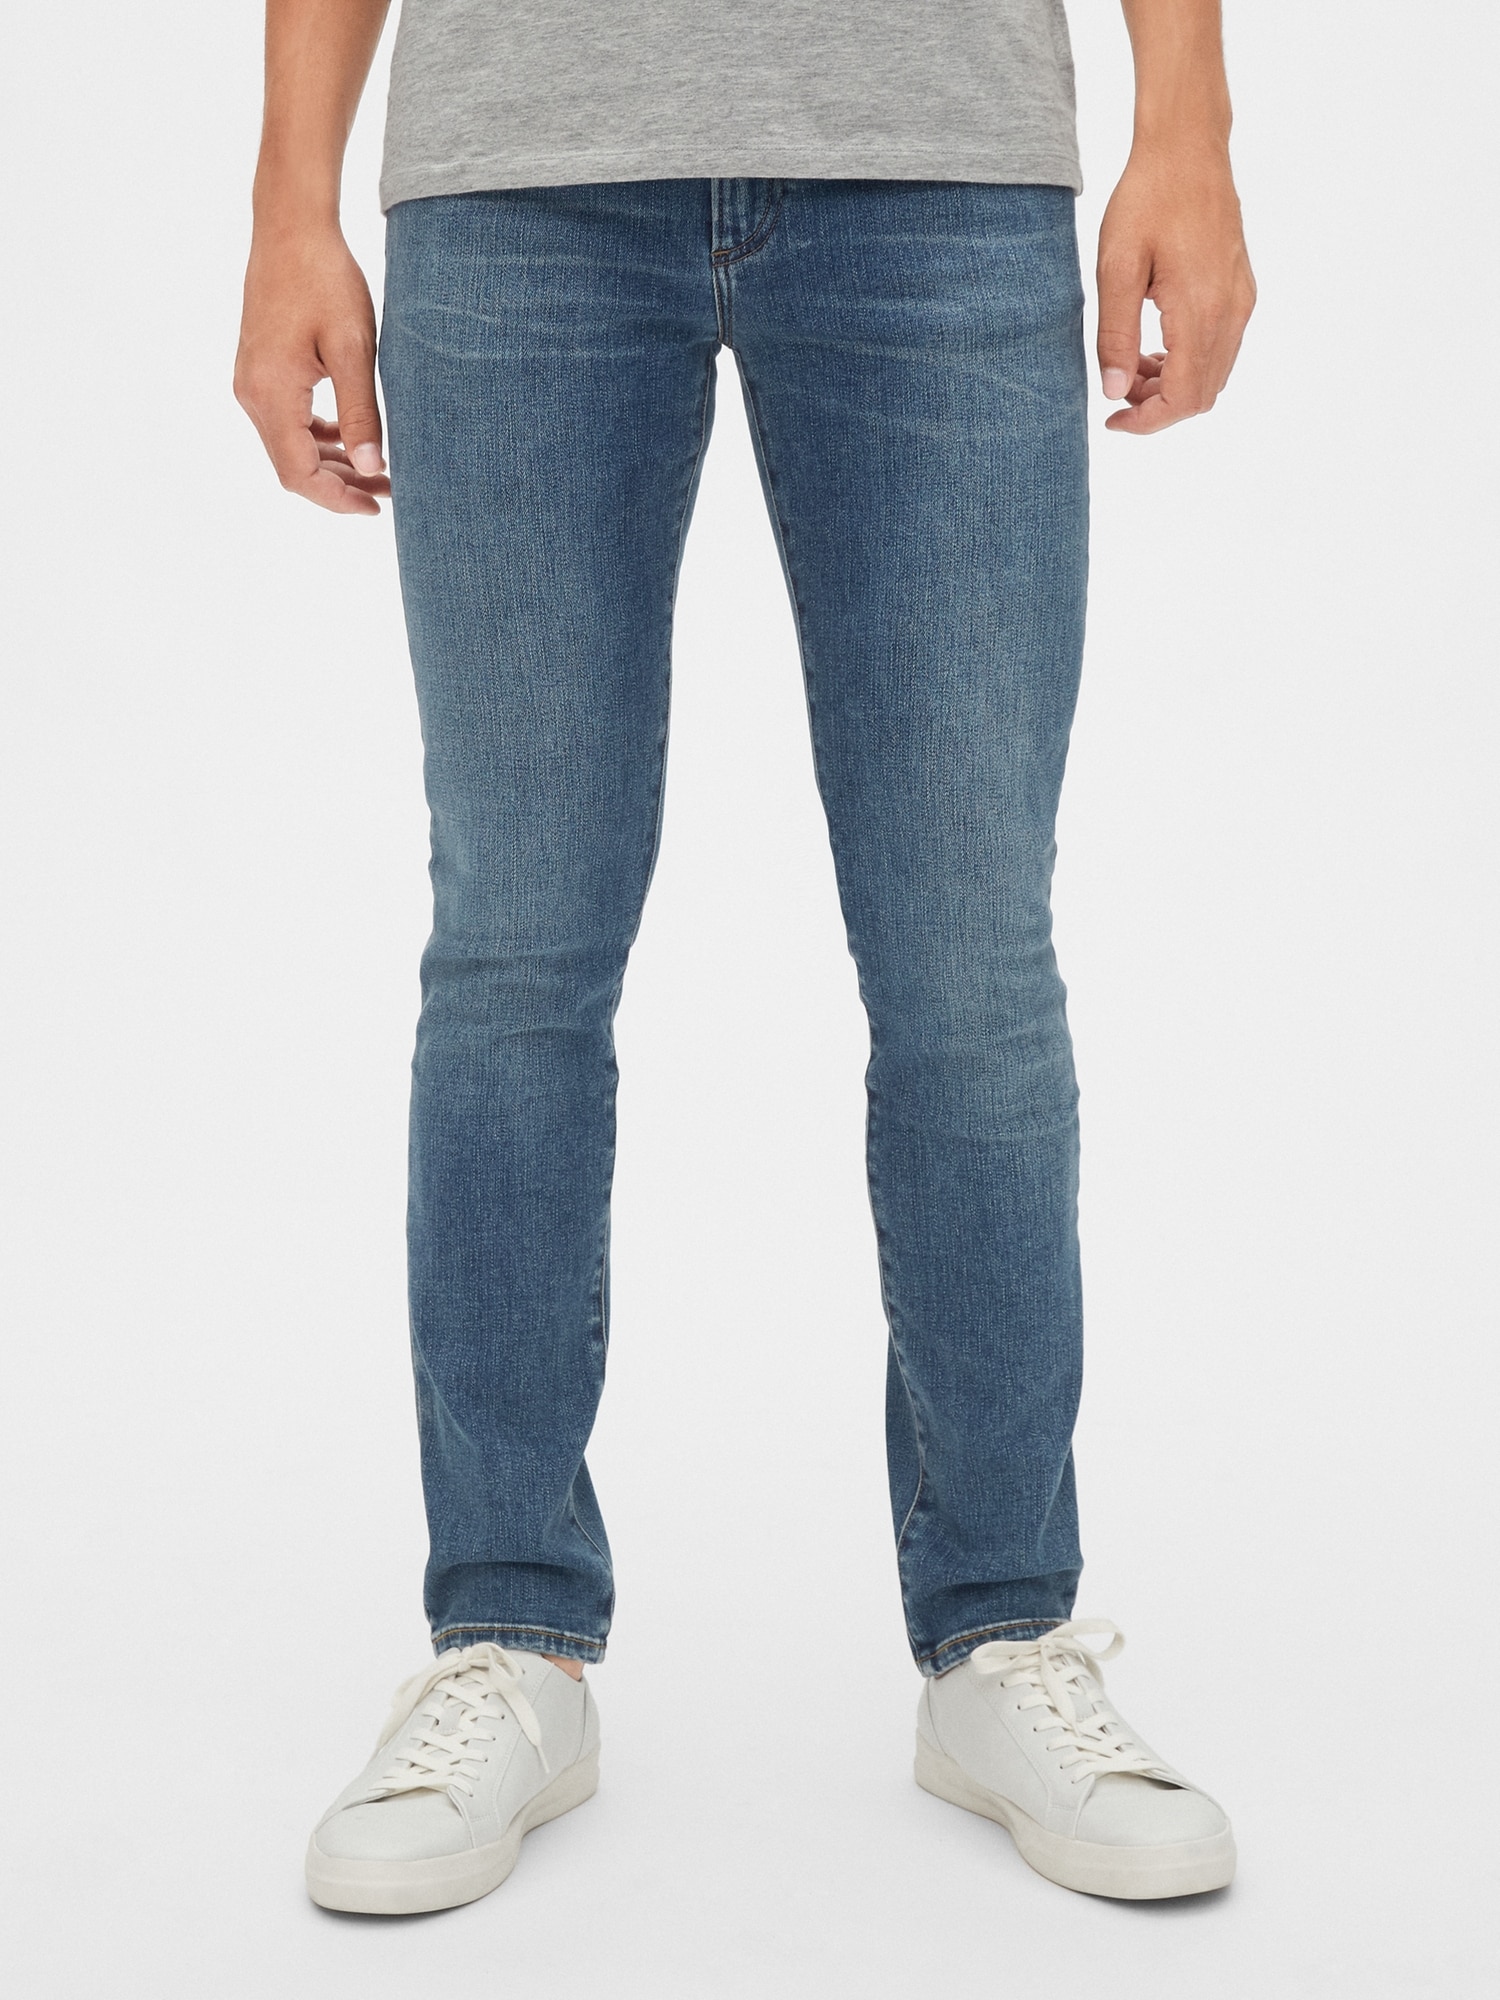 Gap Flex Soft Wear Skinny Jean Pantolon. 1